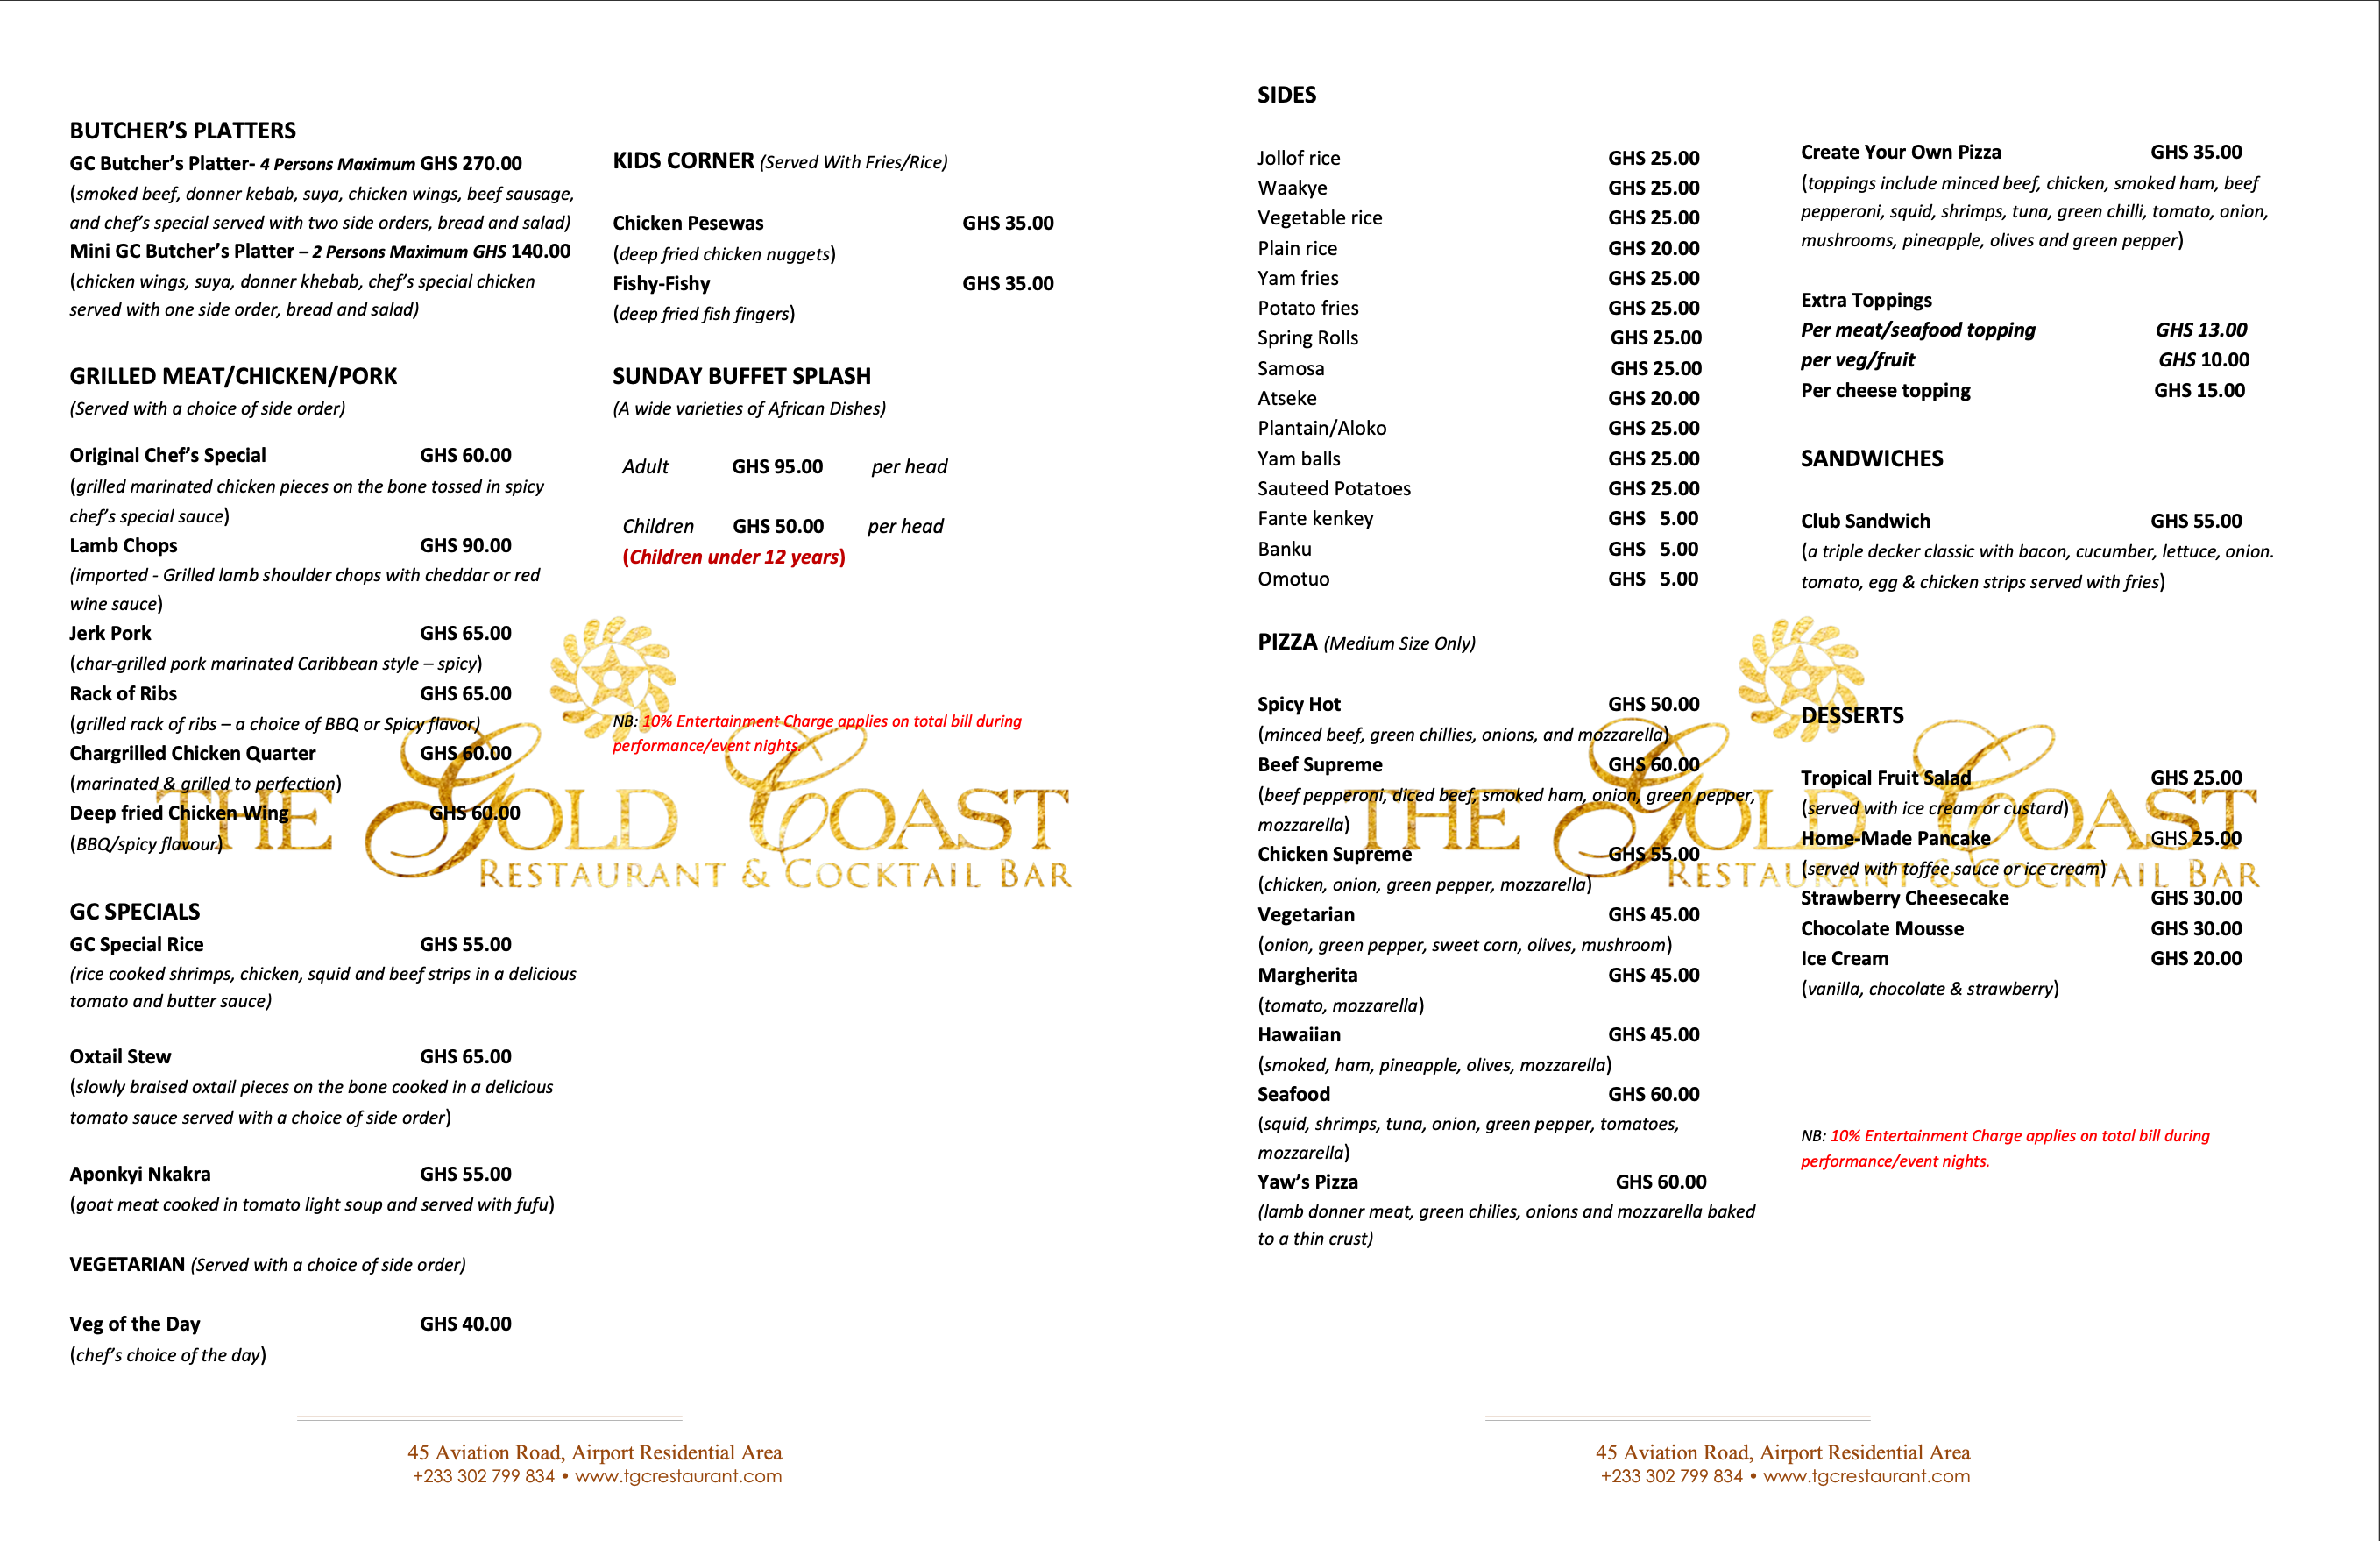 Gold Coast Restaurant & Cocktail Bar Menu and Prices